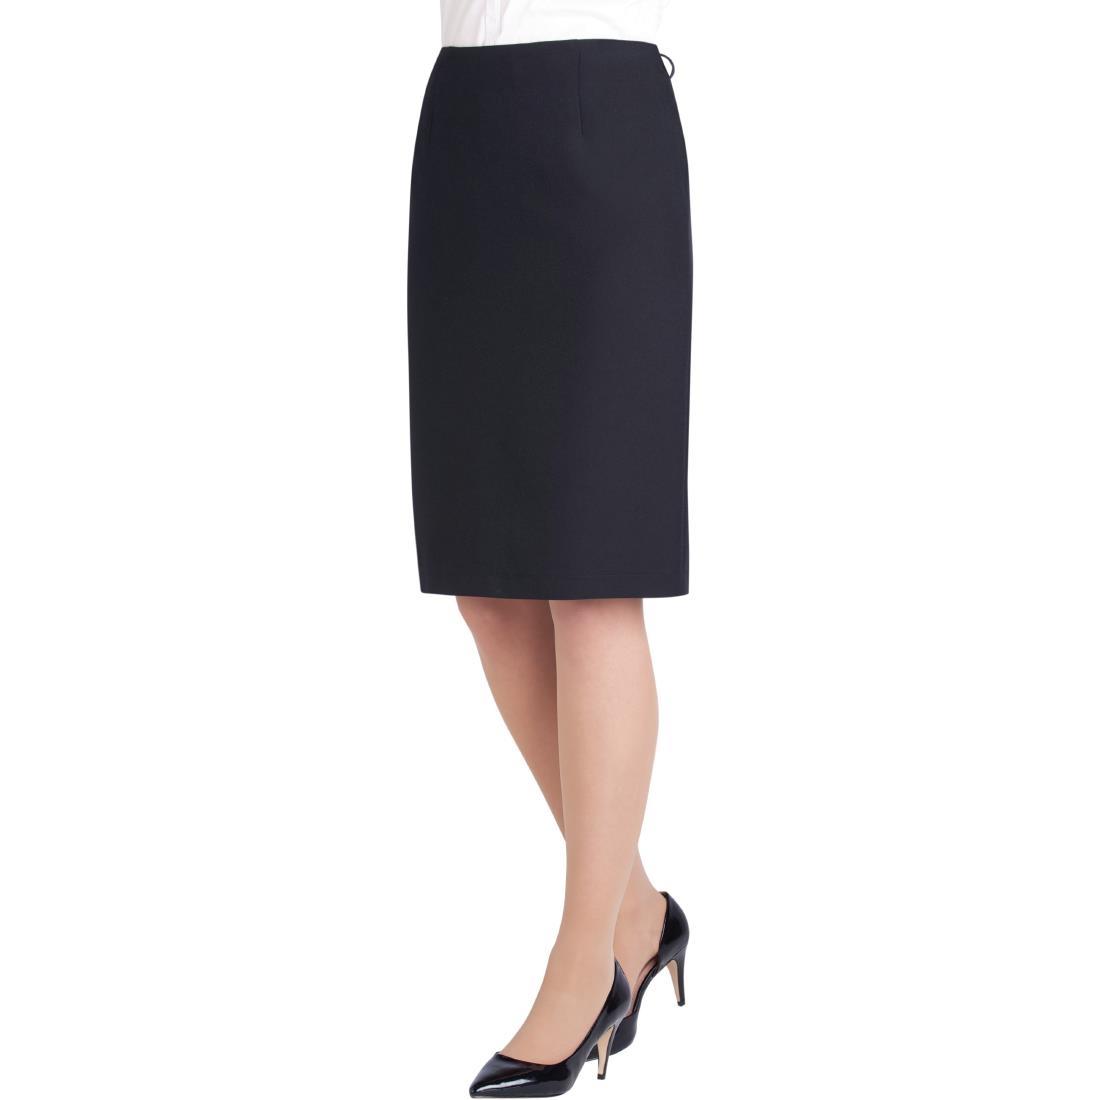 Events Ladies Black Skirt Size 22 - BB174-22  - 1